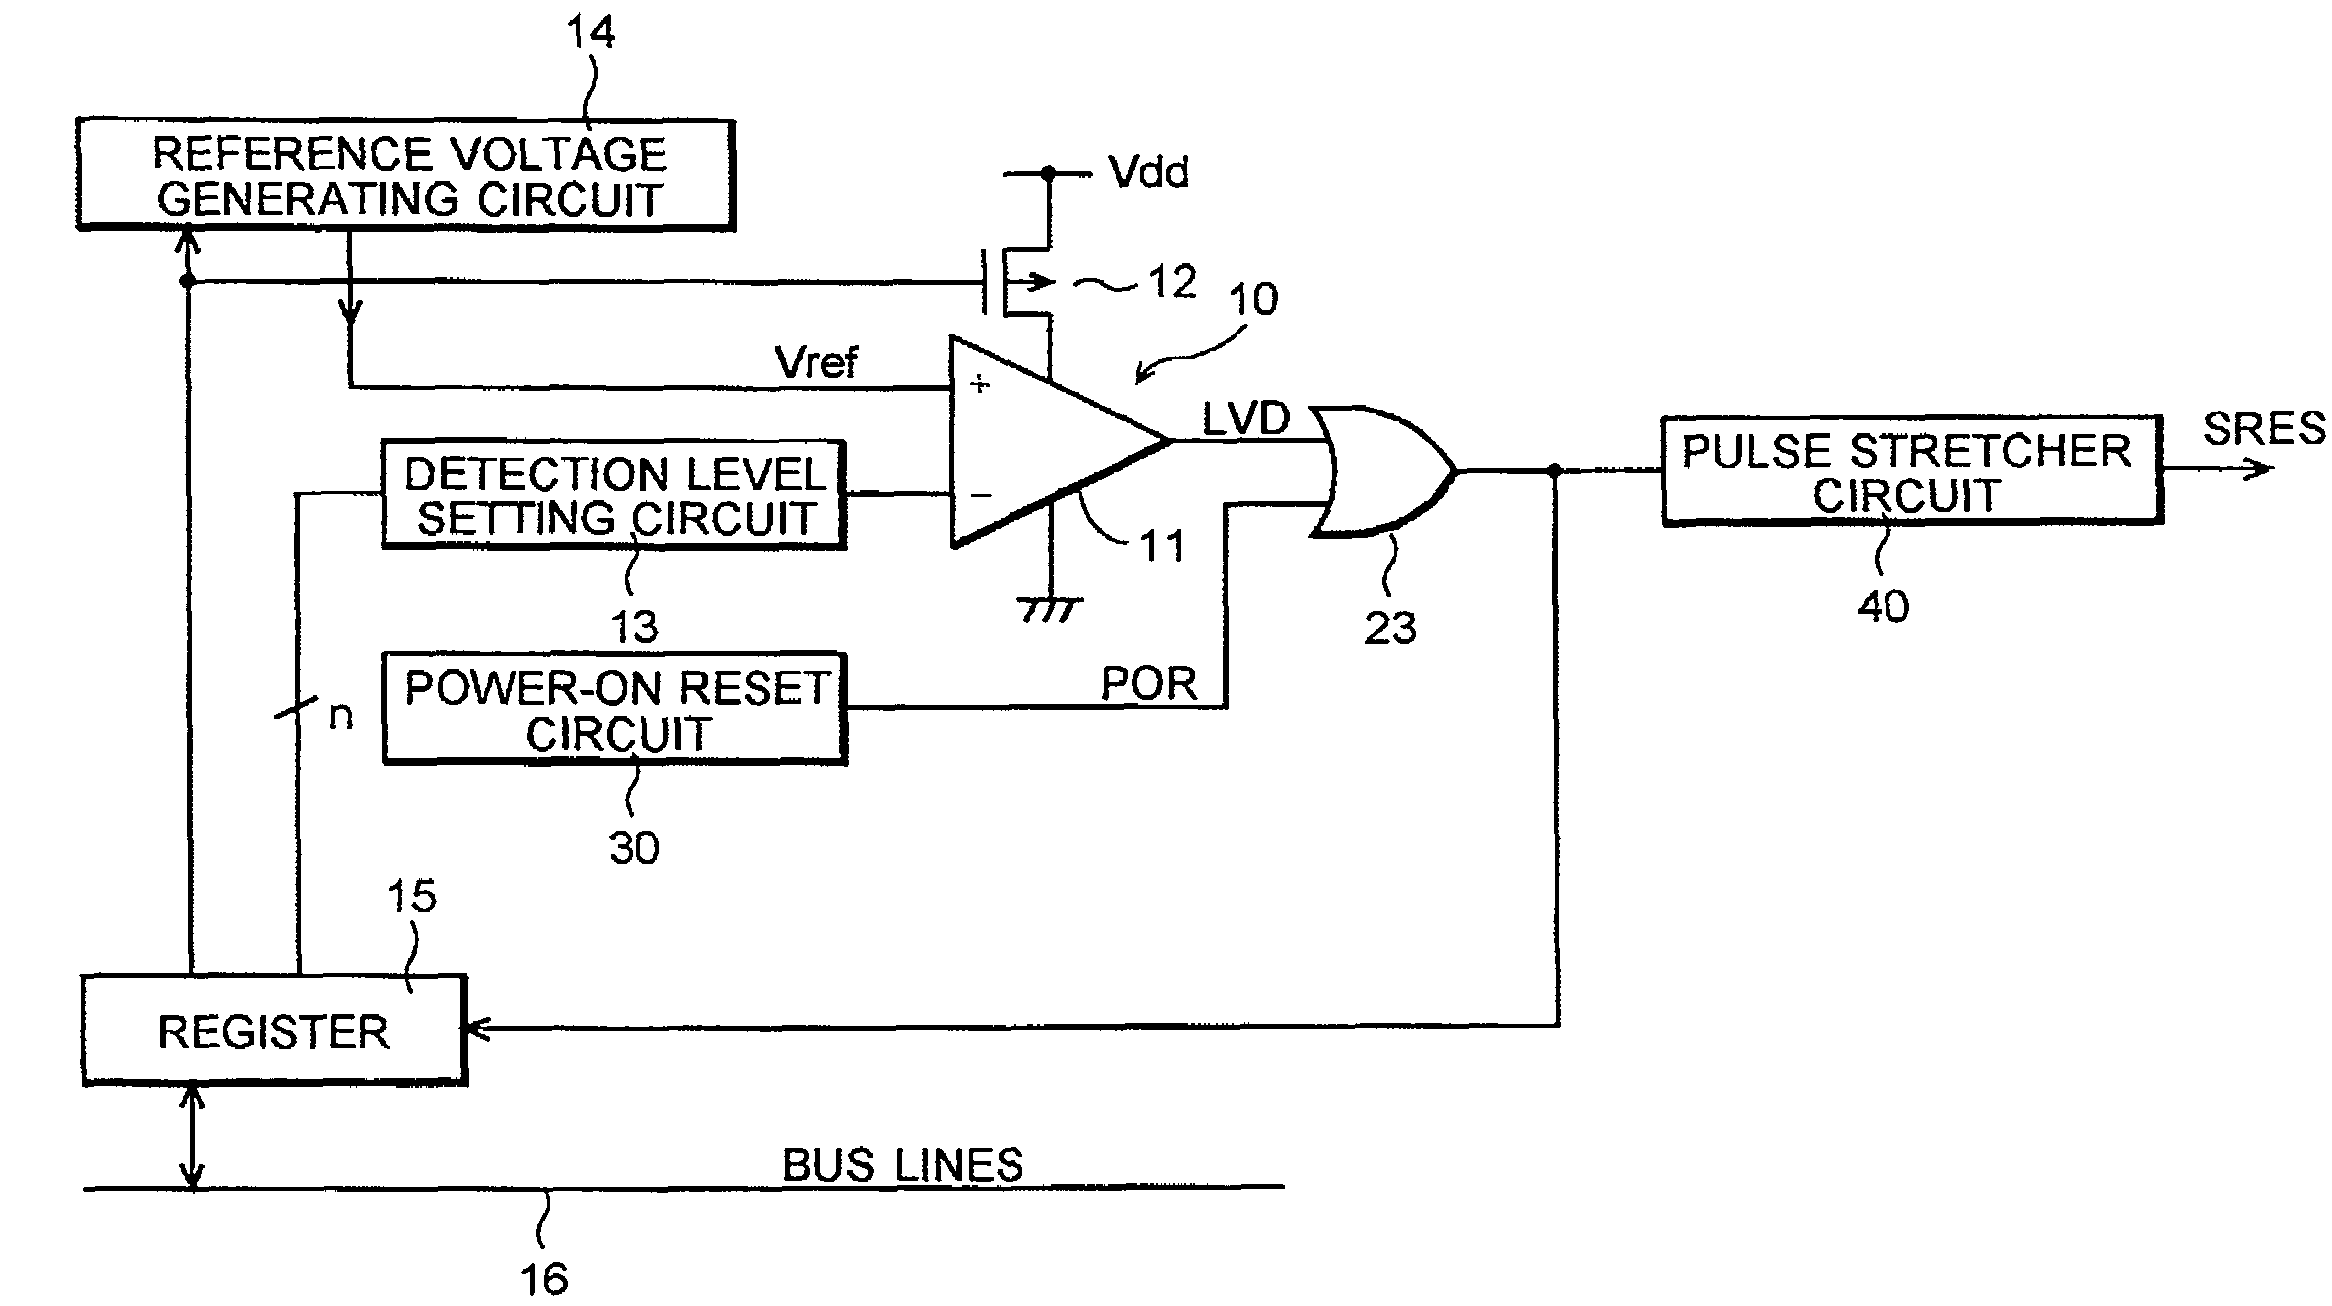 Low-voltage detection reset circuit